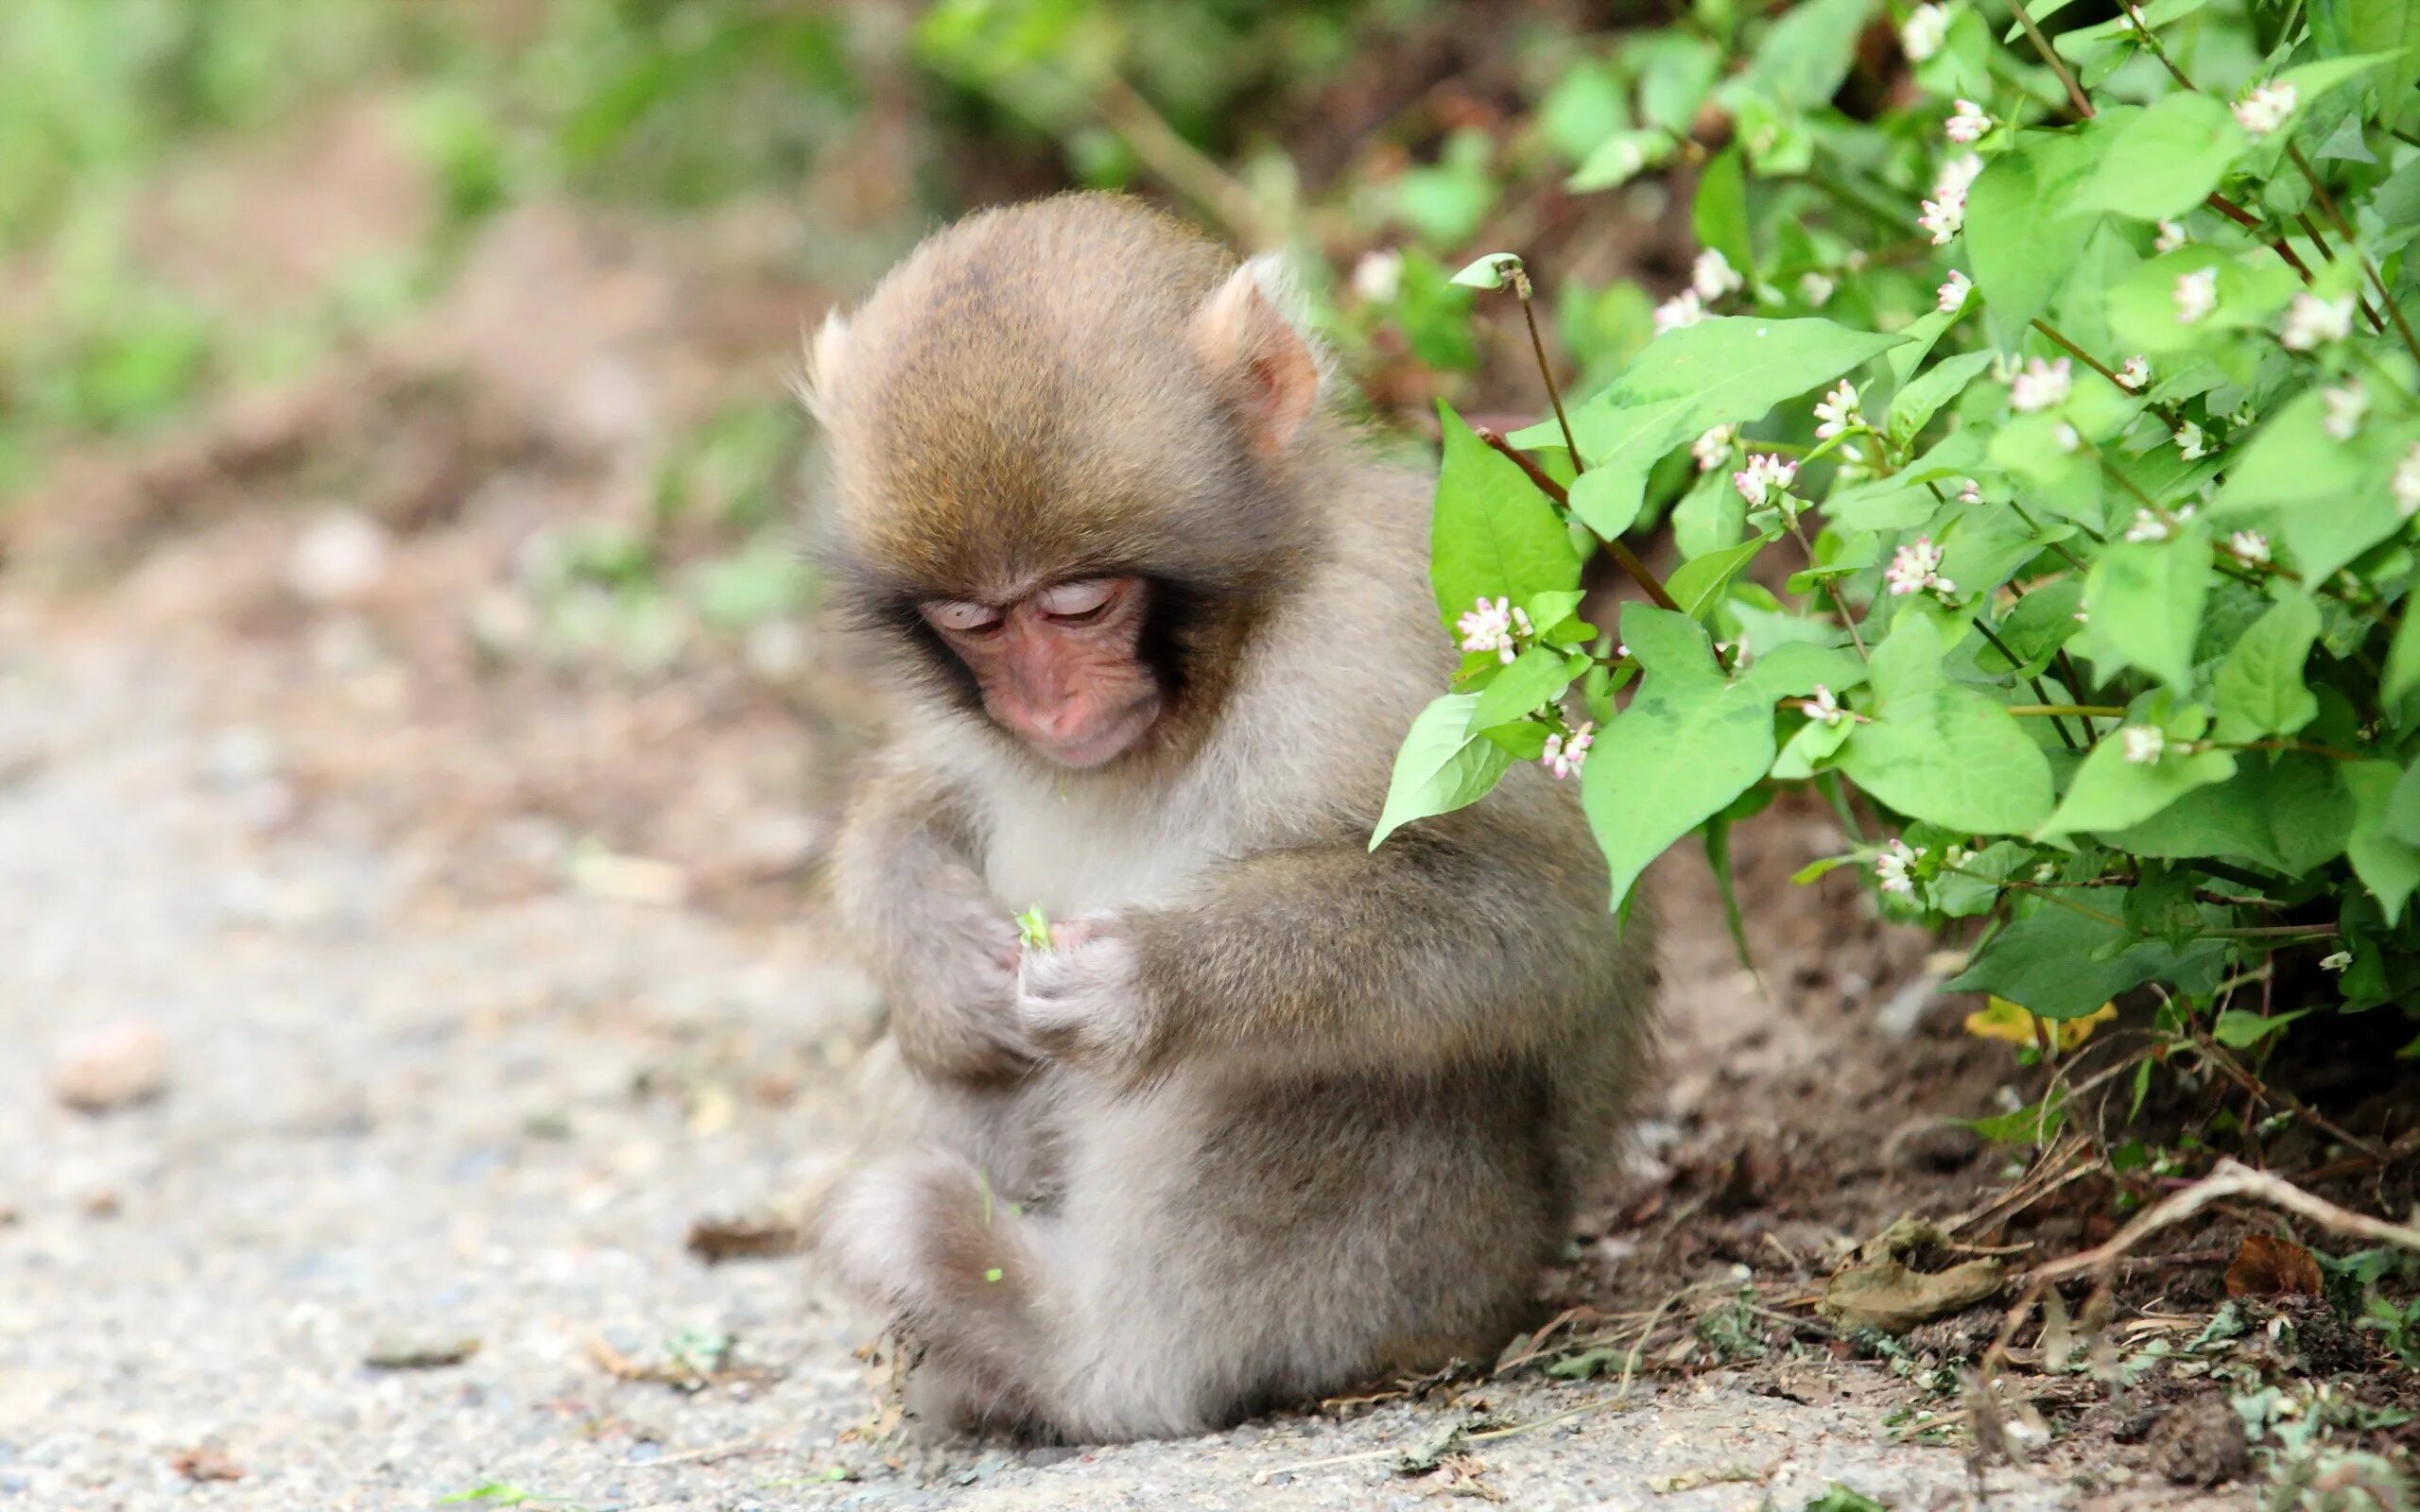 Monkey wallpapers. Обезьяны. Маленькая обезьянка. Обезьяны в природе. Маленькая обезьяна.